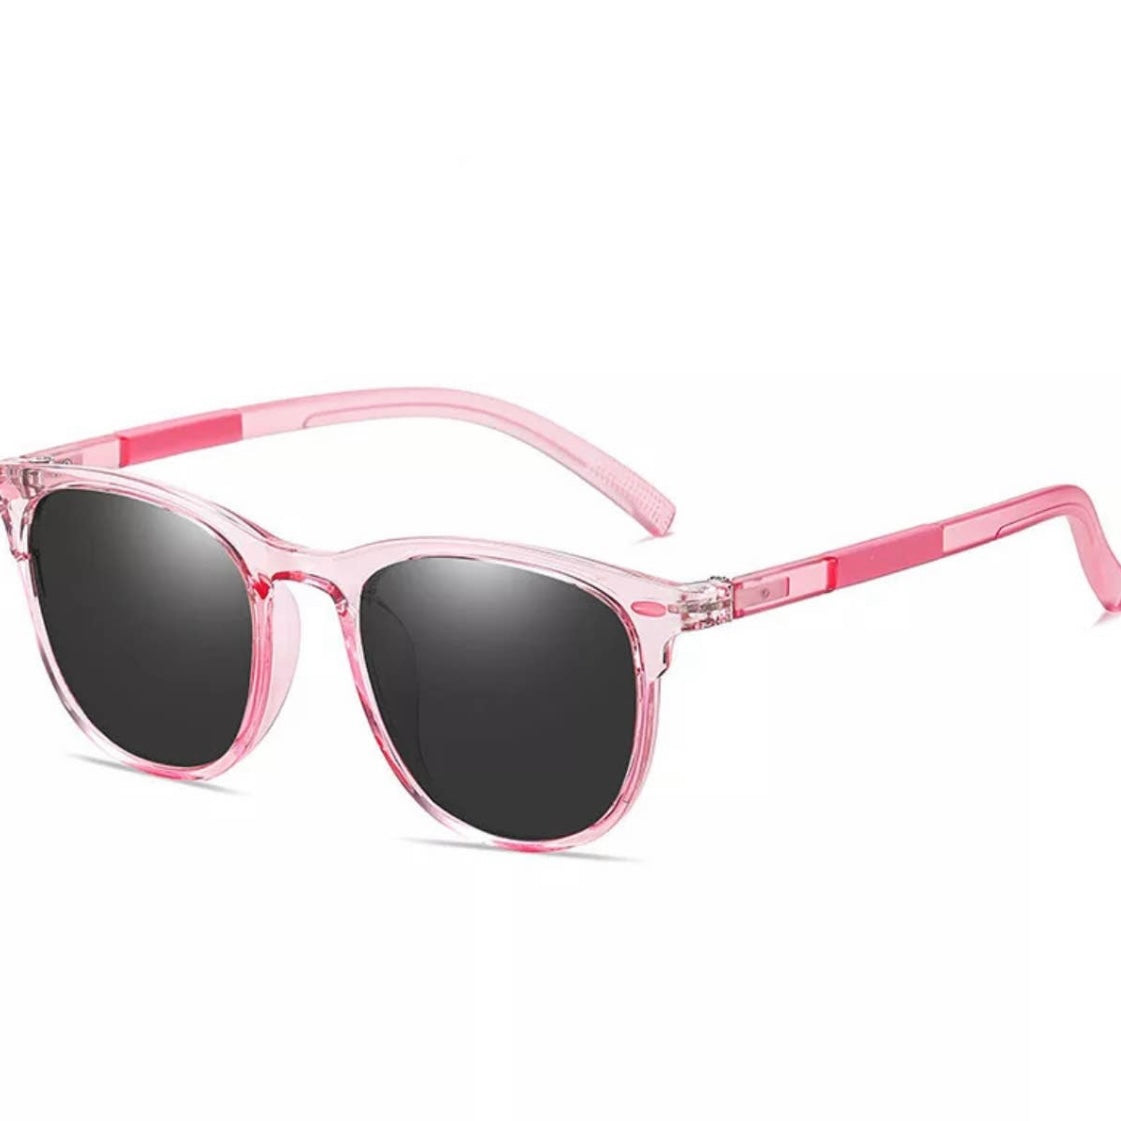 Colored Child Sunglasses- Pink/Black